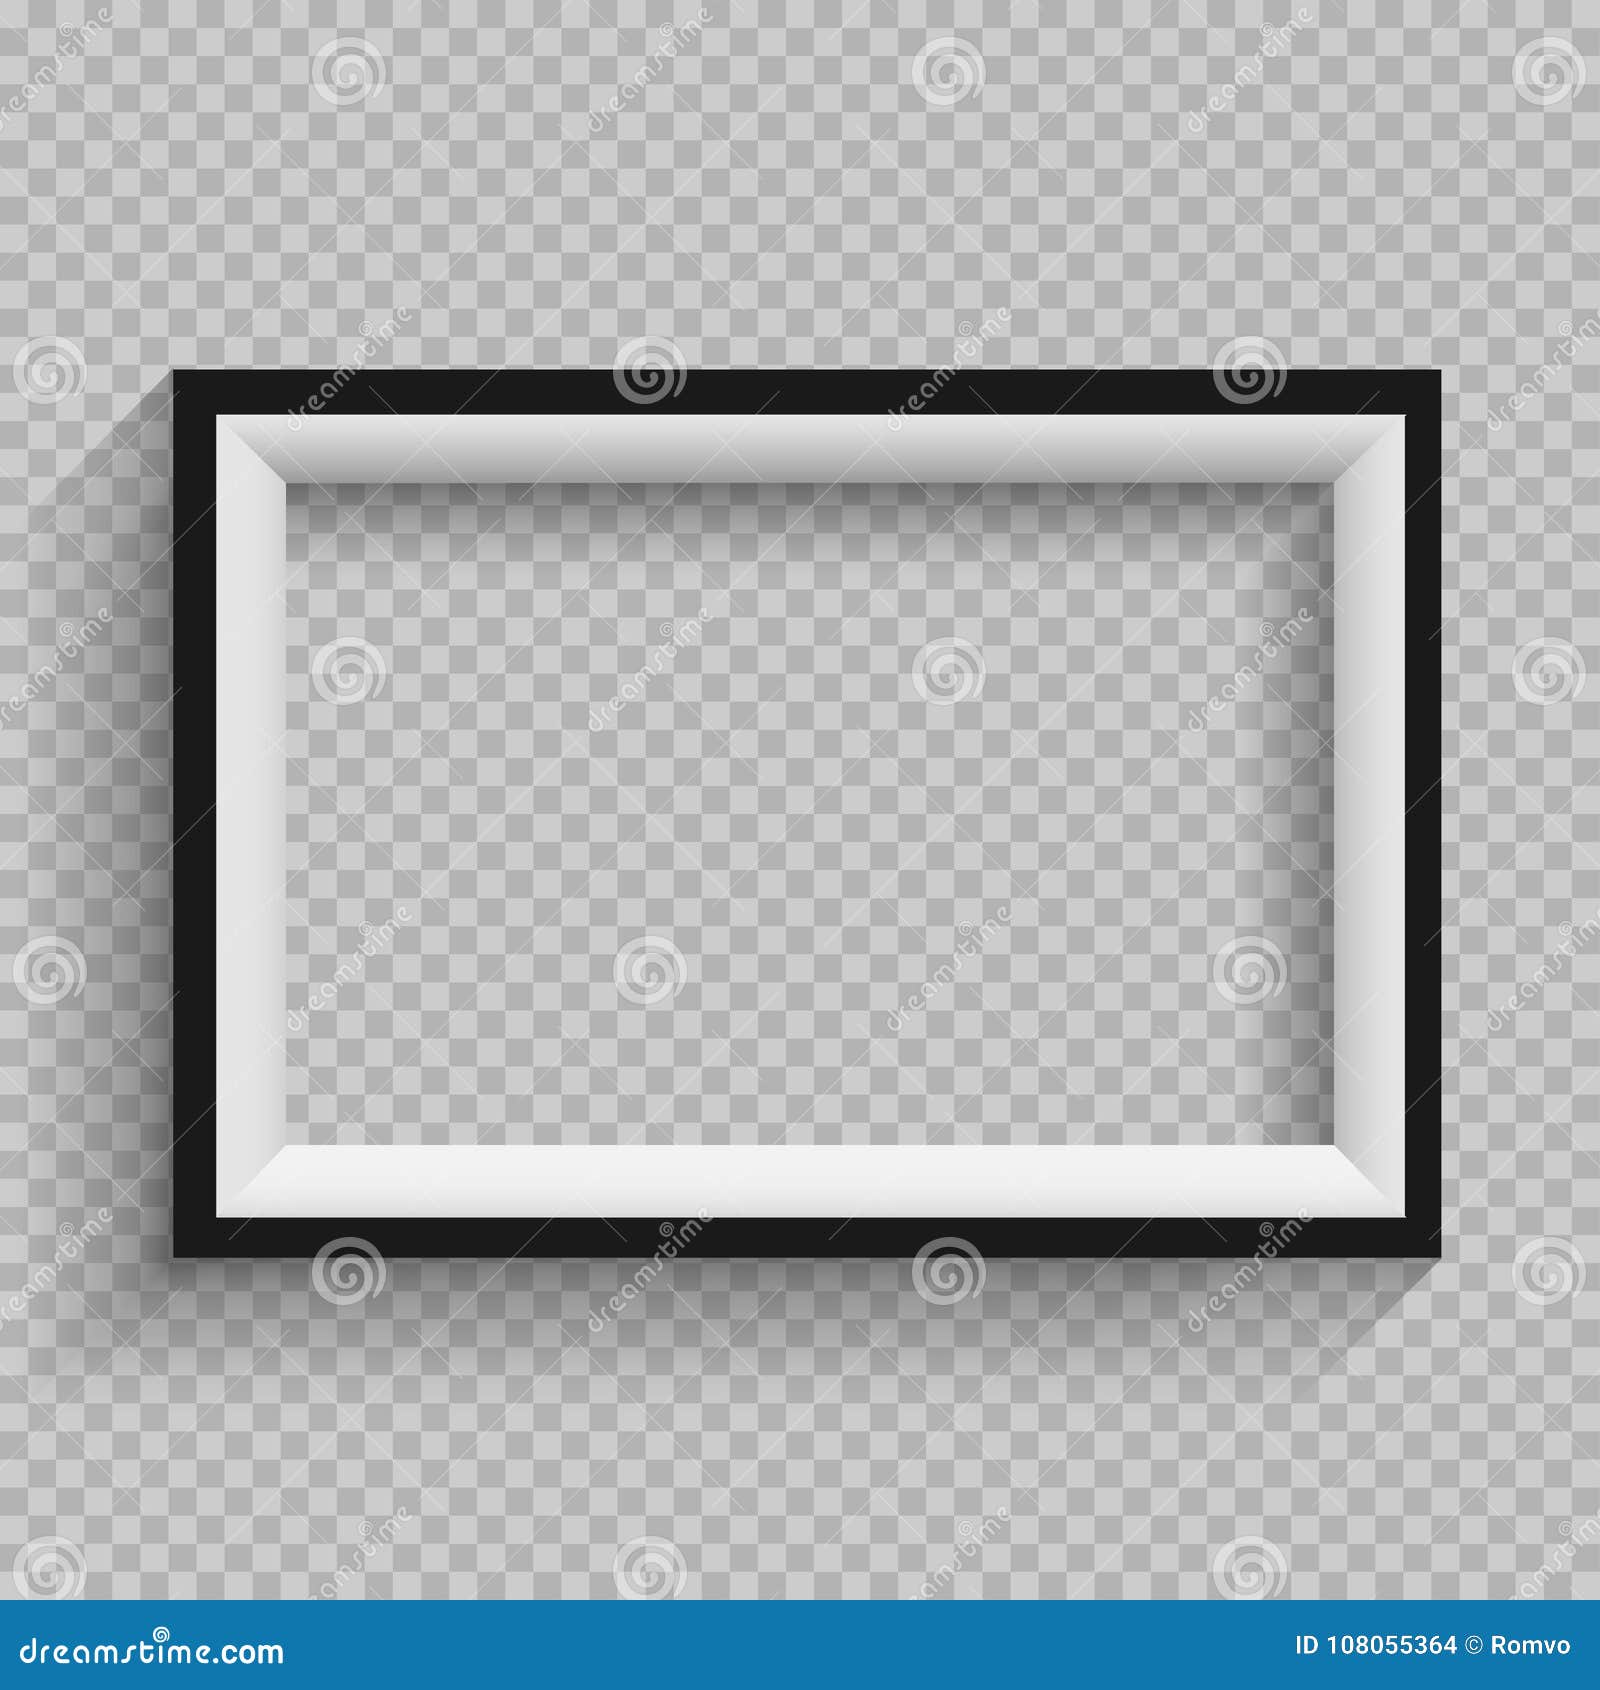 black and white frame transparent